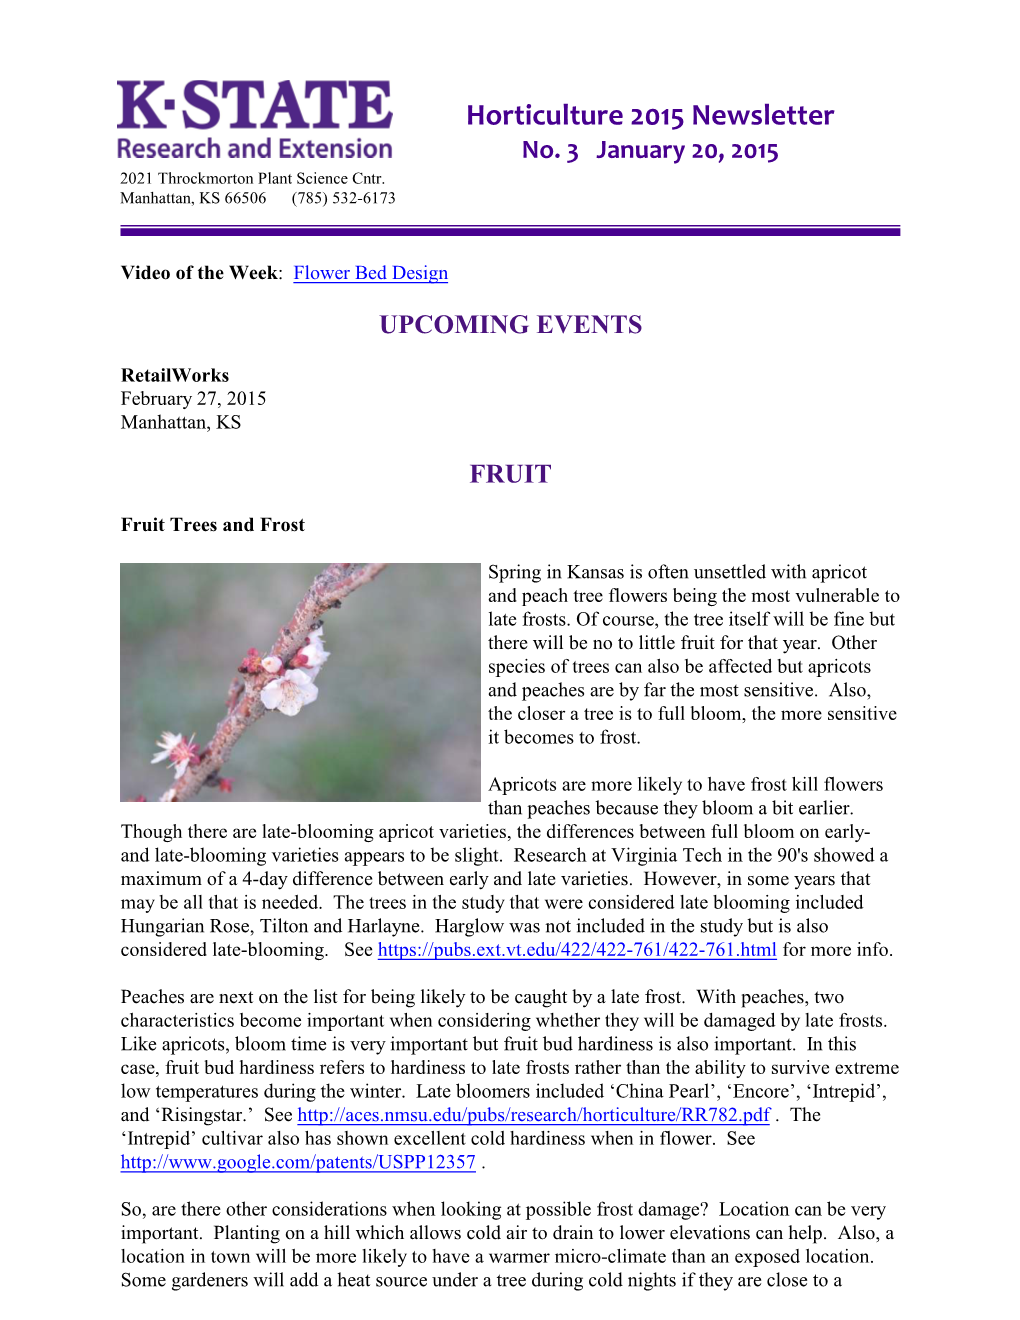 Horticulture 2015 Newsletter No